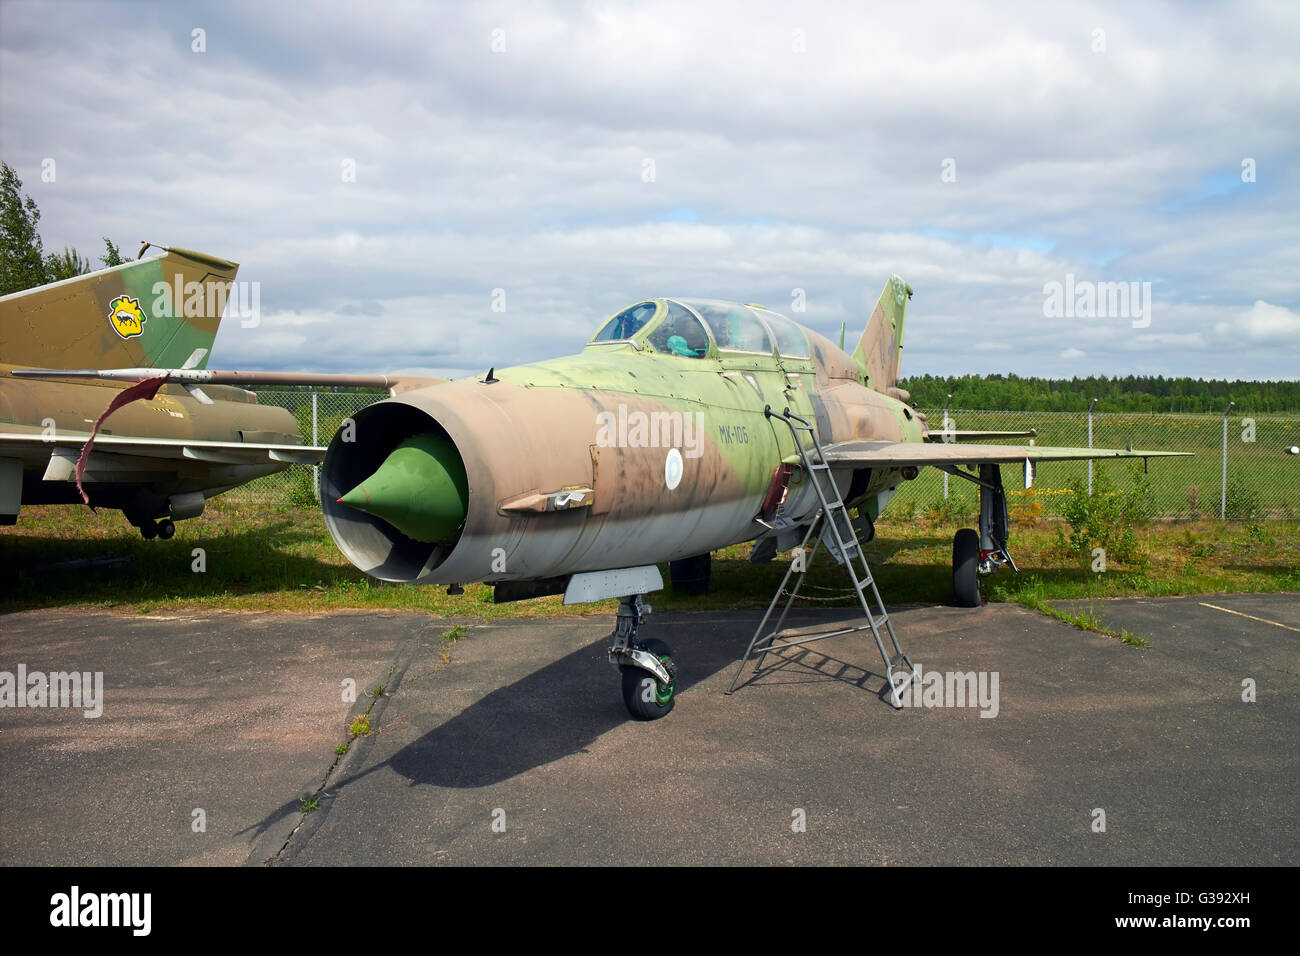 MiG-21UM jet fighter sur l'affichage, la Finlande Banque D'Images